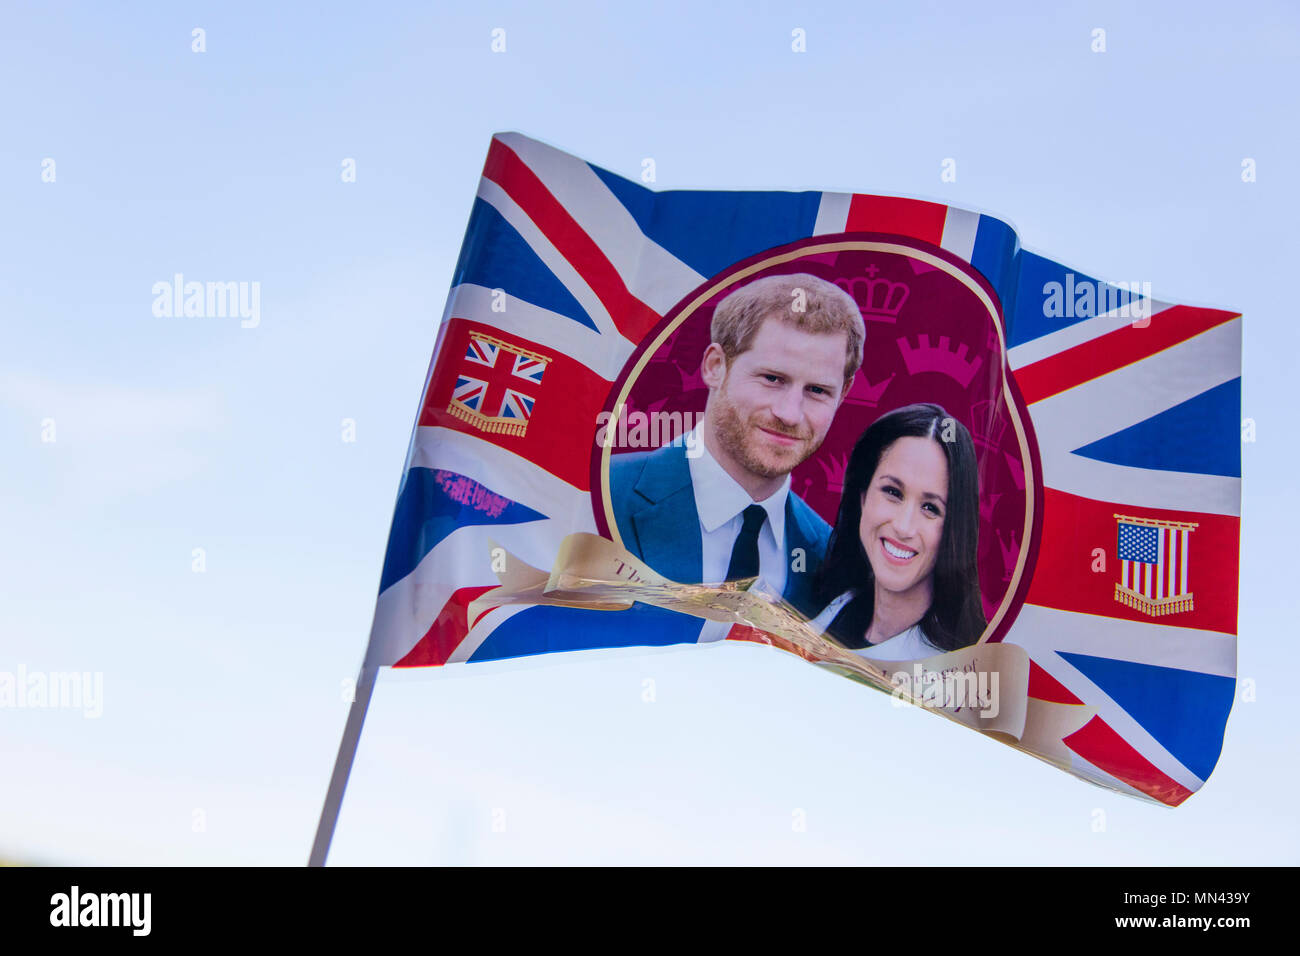 London, UK. 14th May 2018. Union jack flag celebrating the Royal wedding of Prince Harry and Meghan markle. Credit: Ink Drop/Alamy Live News Stock Photo